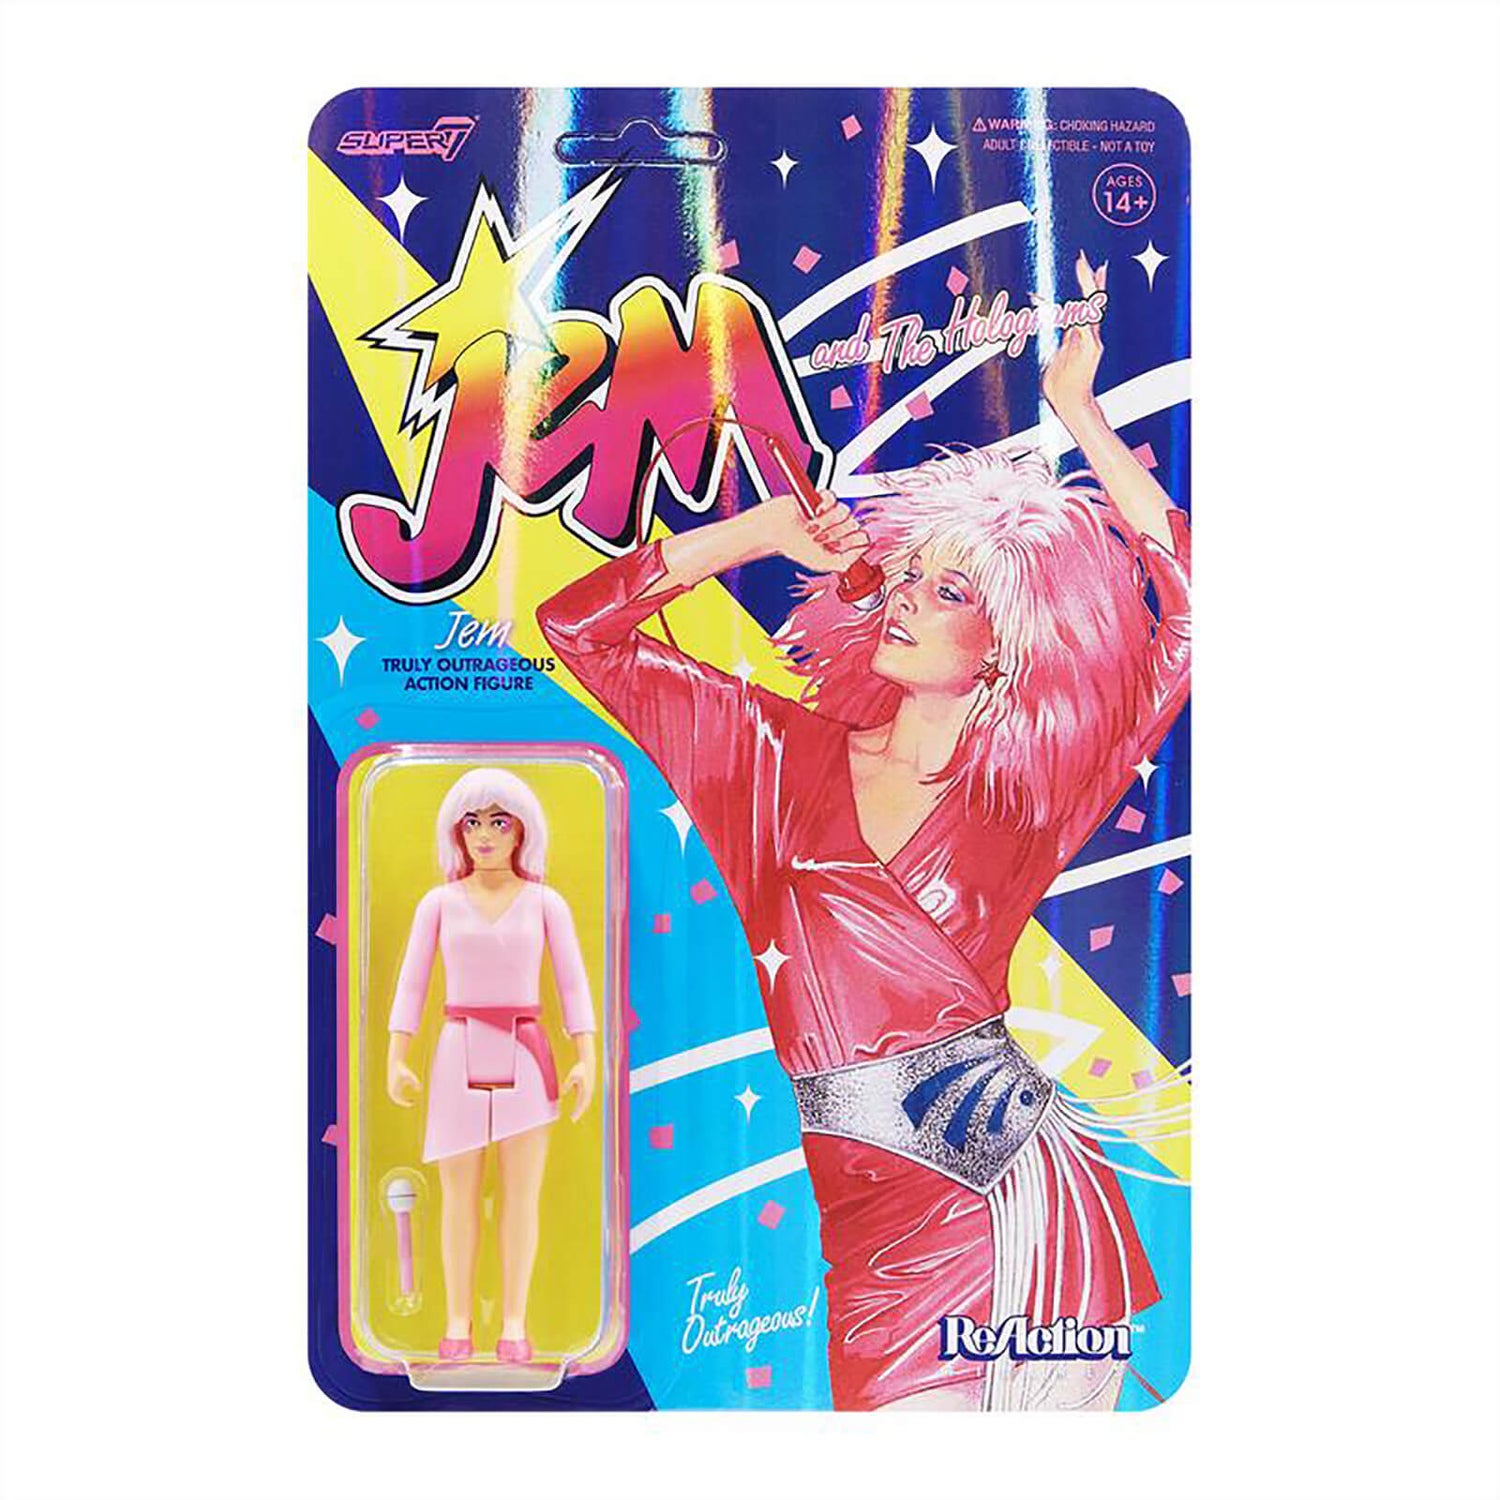 Super7 Jem And The Holograms ReAction Figure - Jem